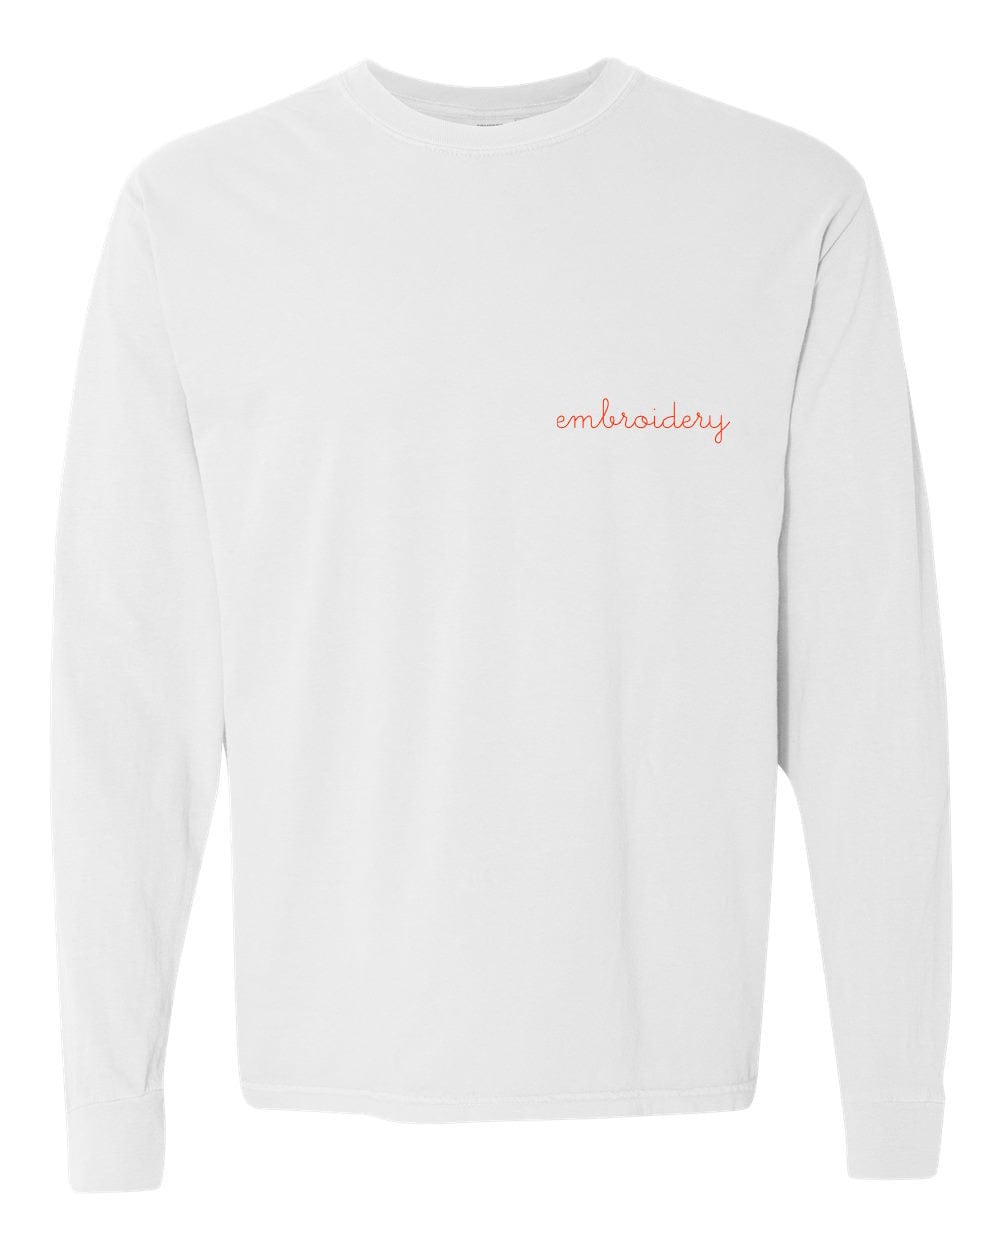 Adult Vintagewash Longsleeve Shirt (Unisex) juju + stitch Adult S / White custom personalized script embroidered longsleeve shirt